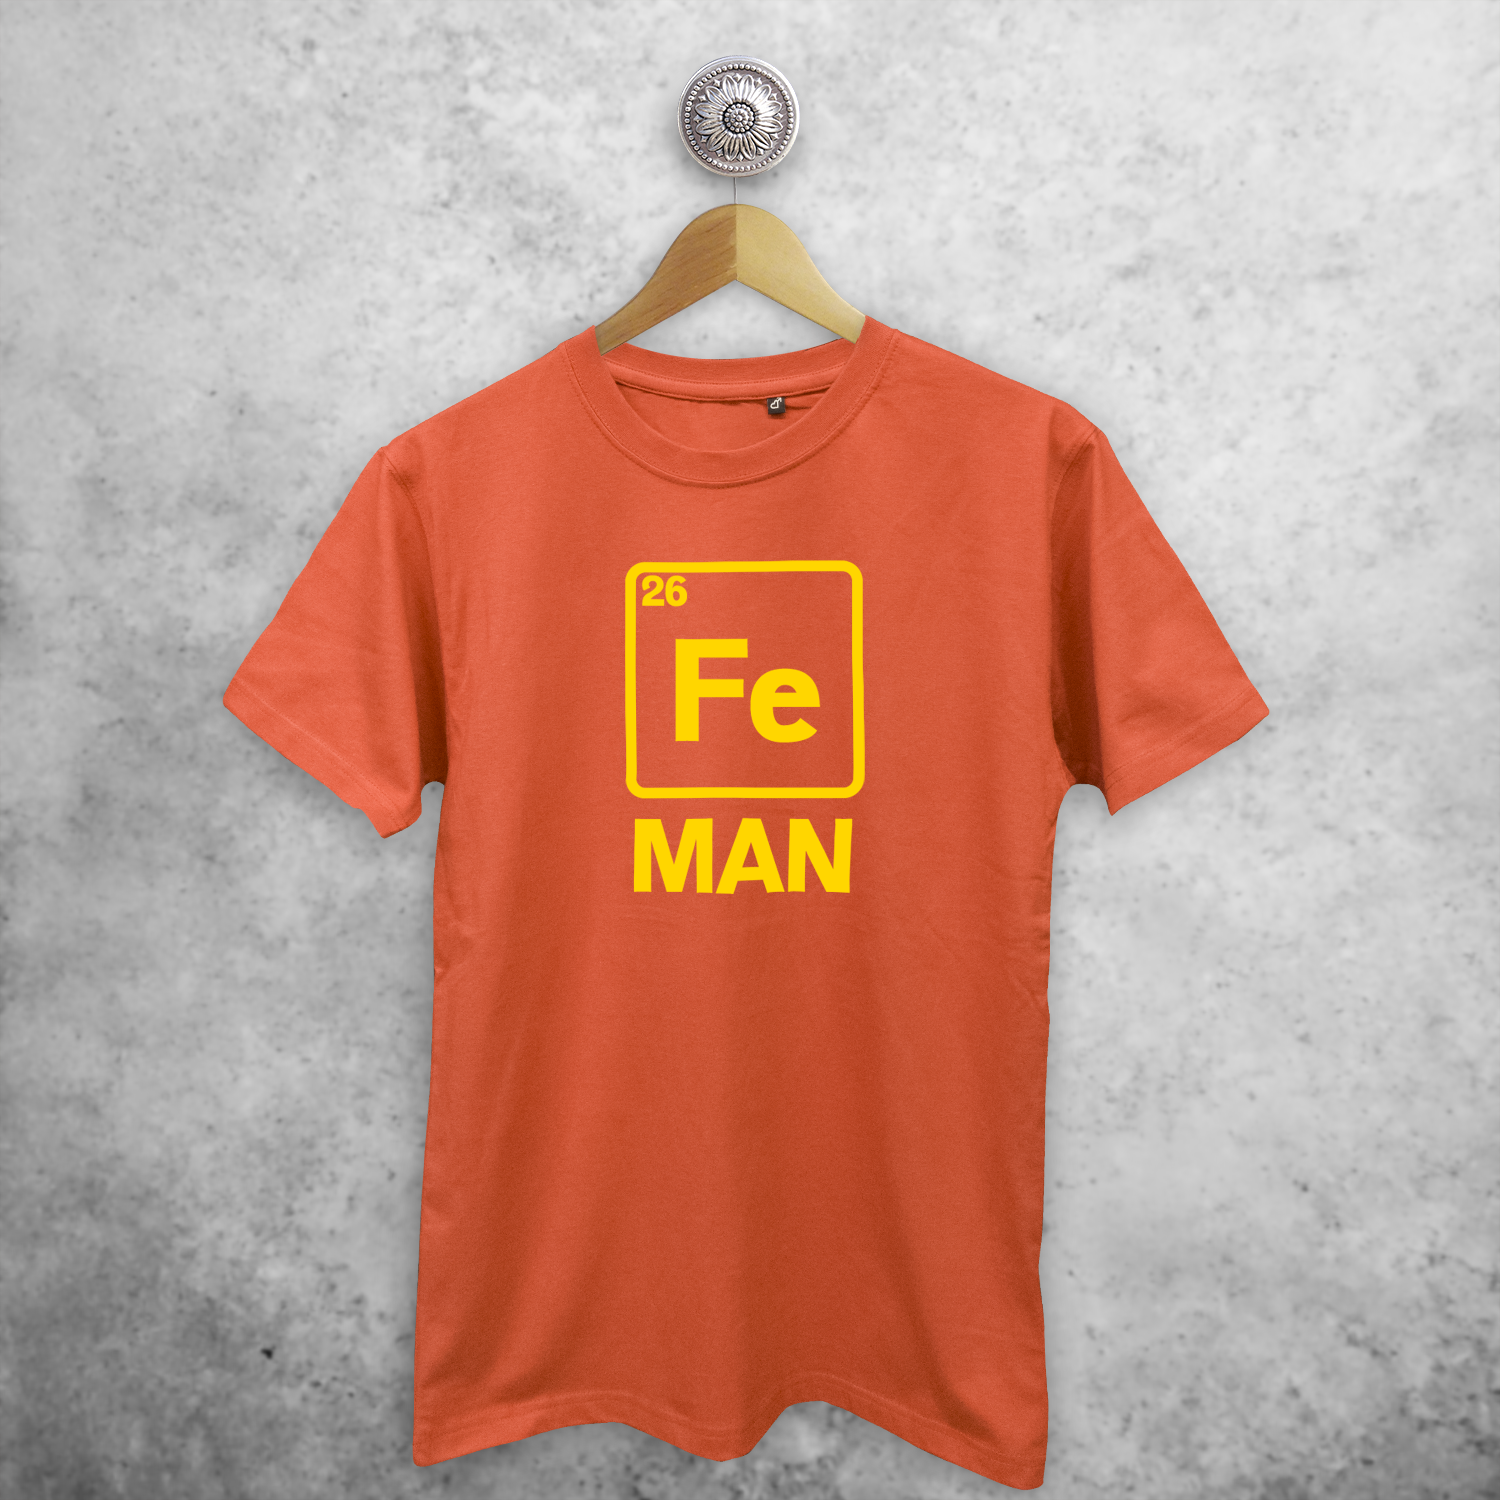 'Fe man' adult shirt